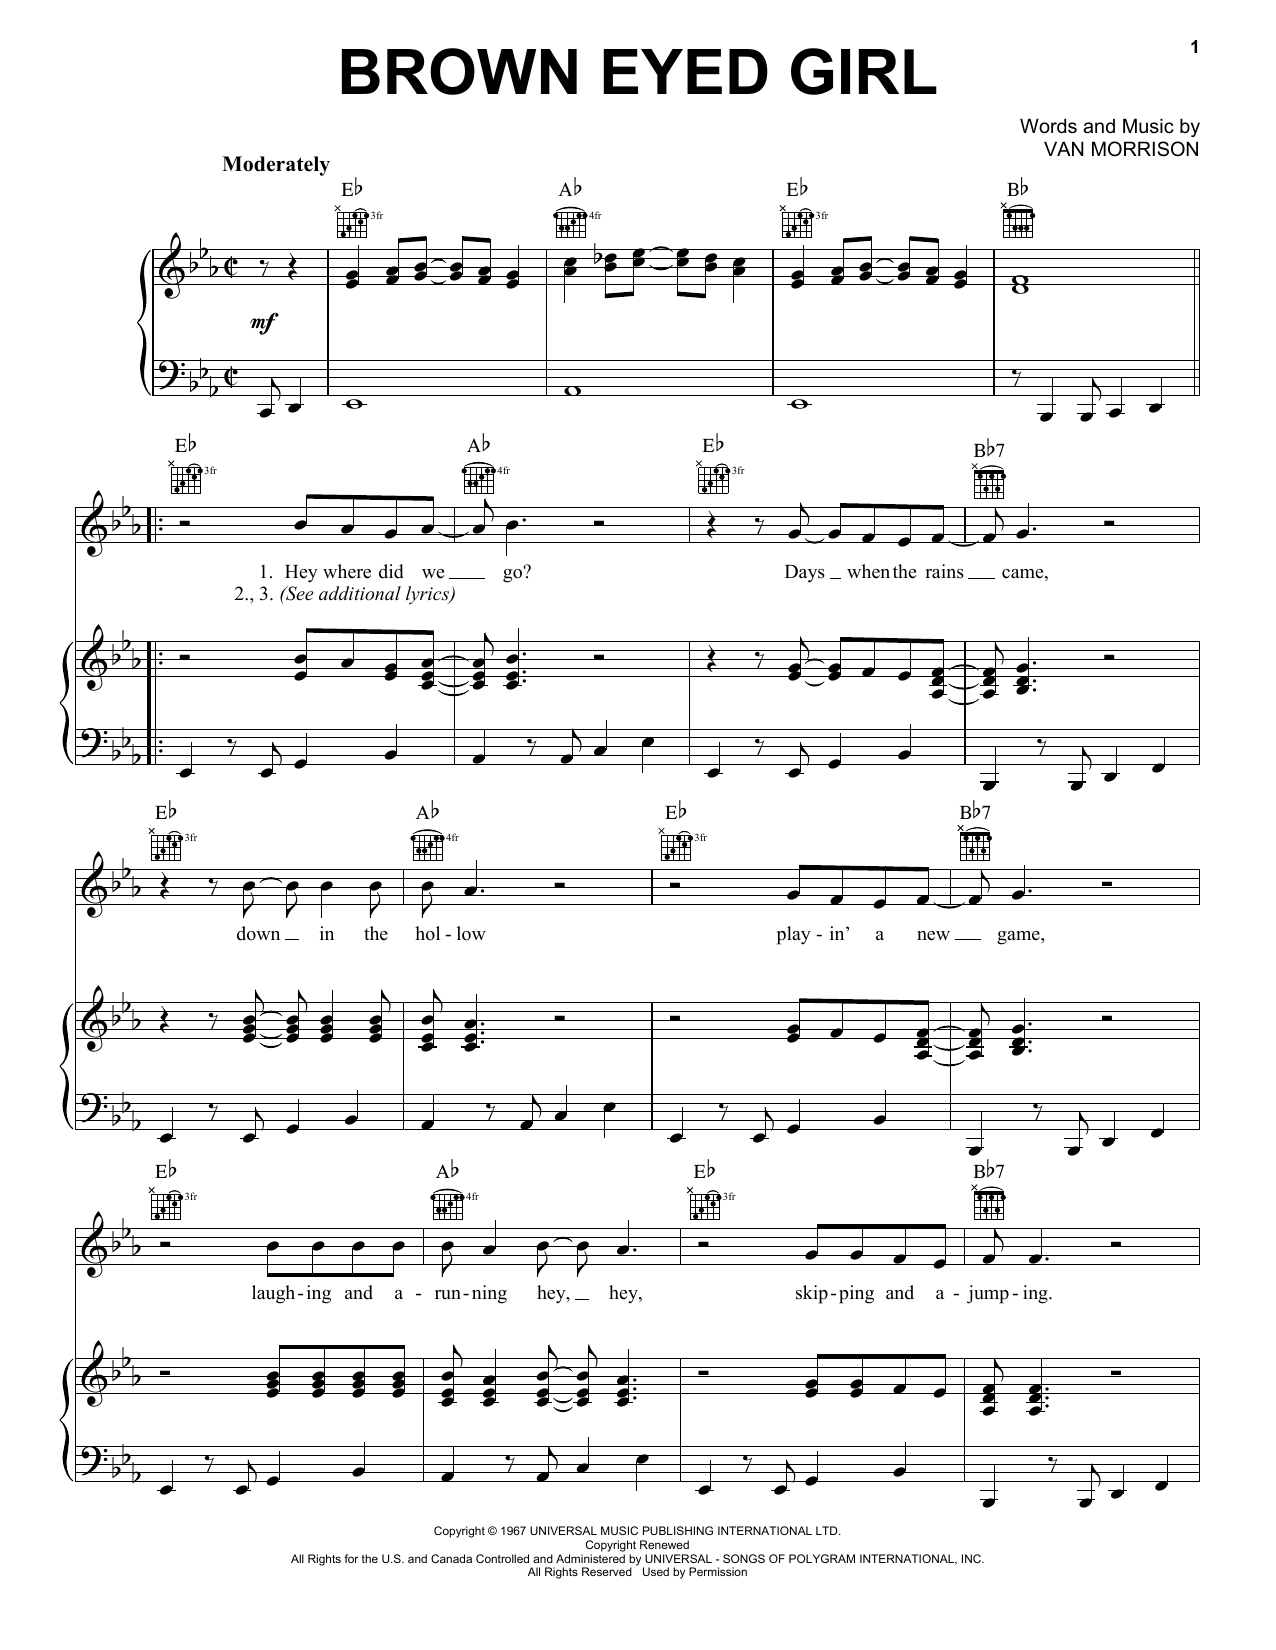 Van Morrison Brown Eyed Girl sheet music notes and chords. Download Printable PDF.